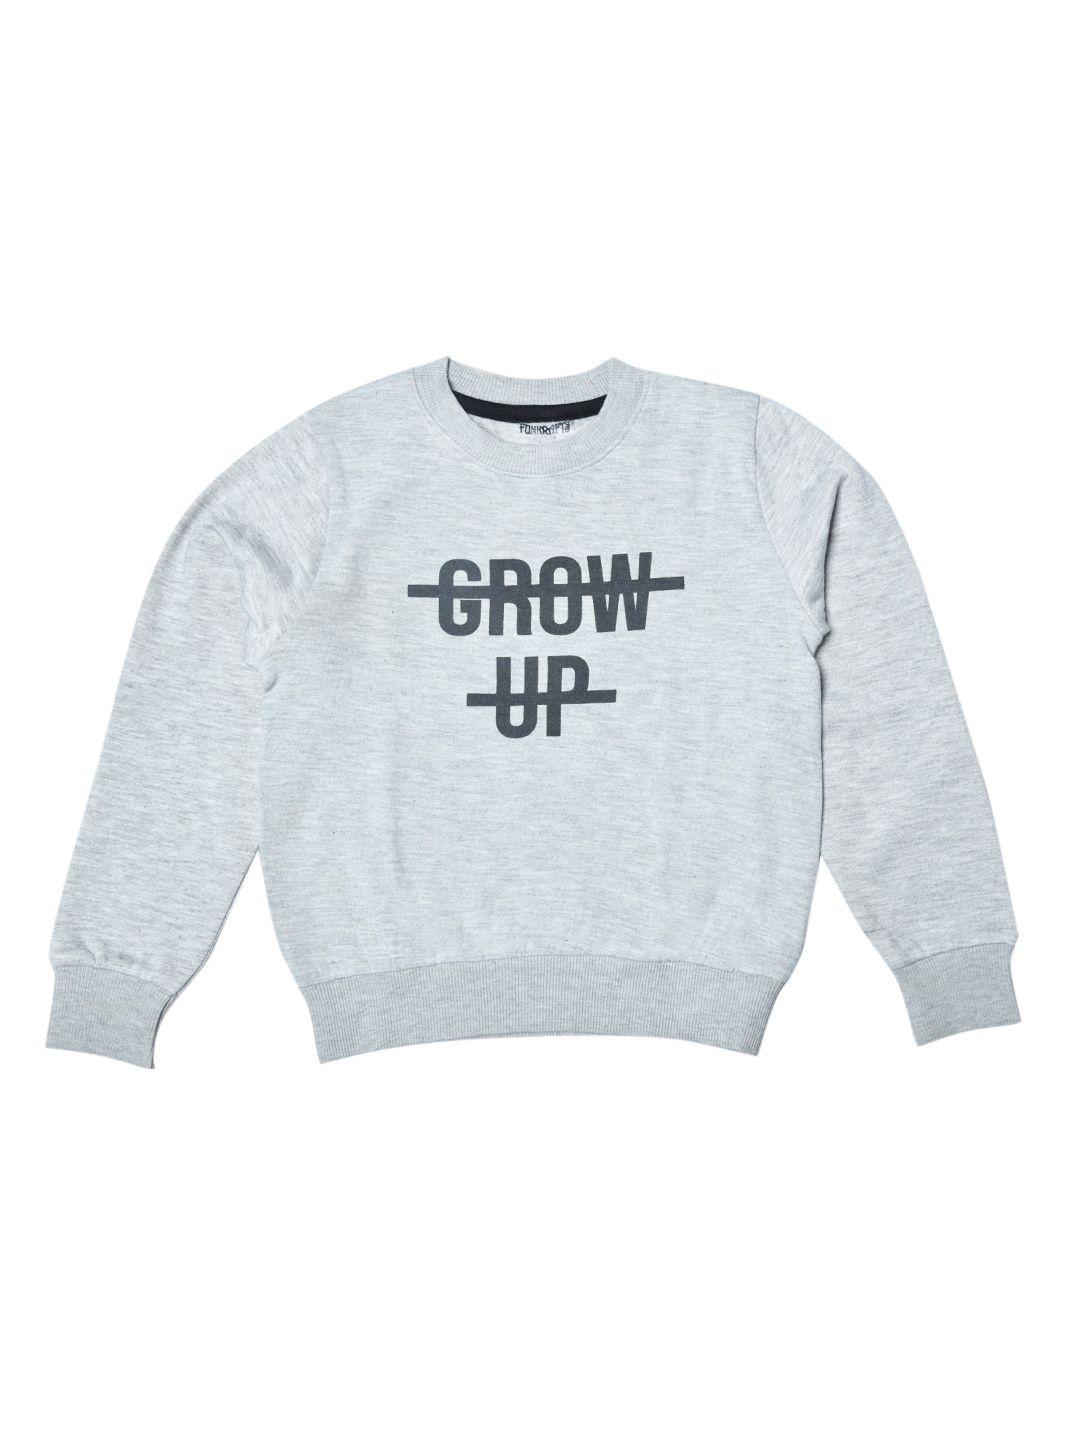 funkrafts unisex kids grey printed fleece sweatshirt